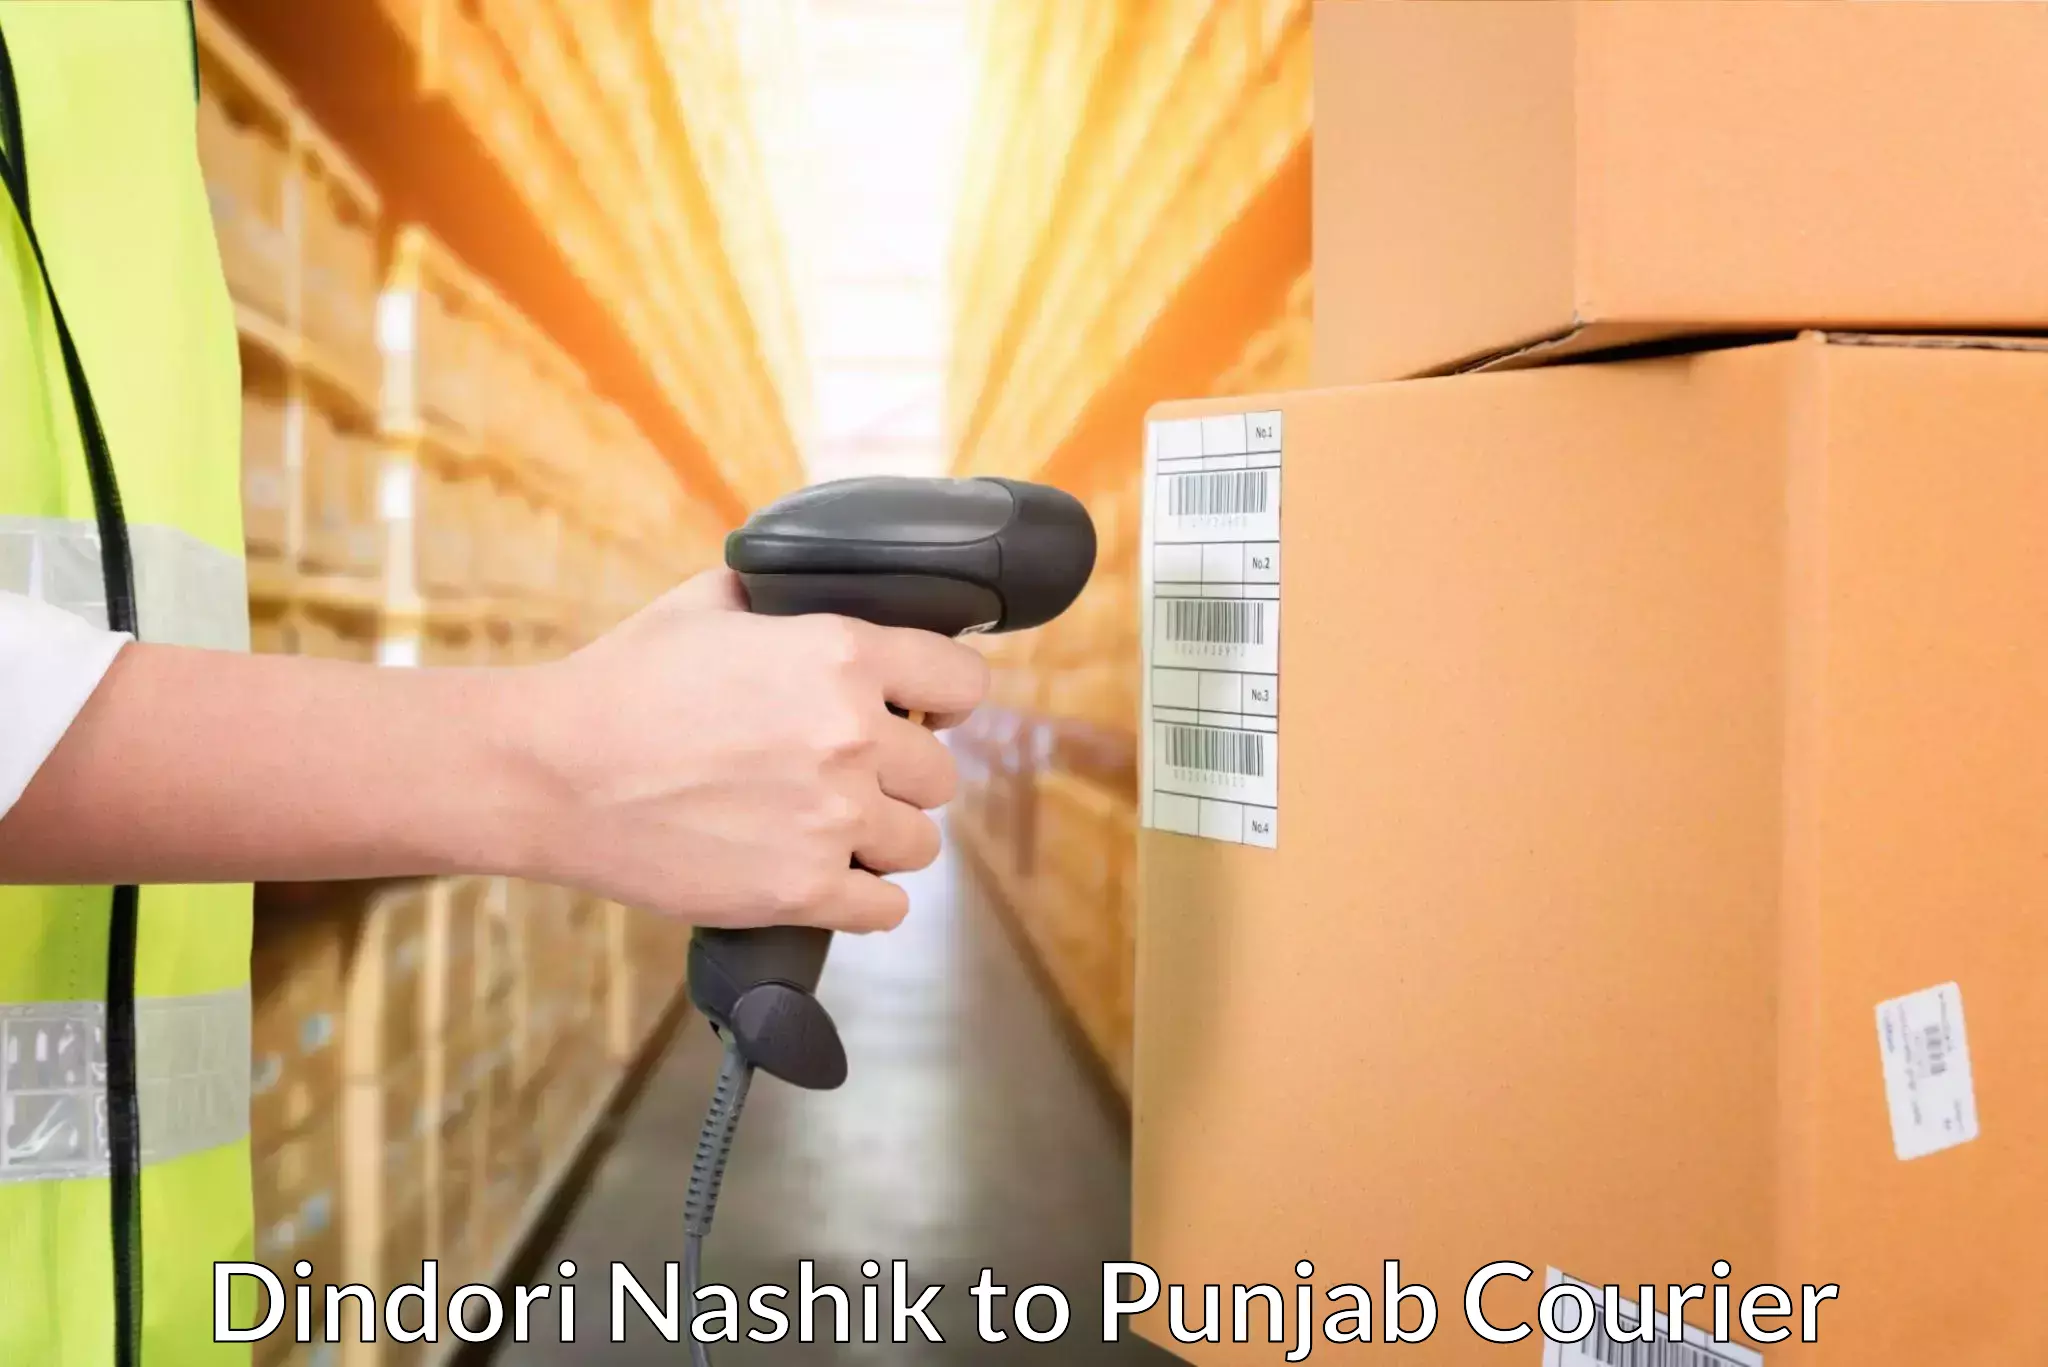 Express logistics service Dindori Nashik to Nawanshahr